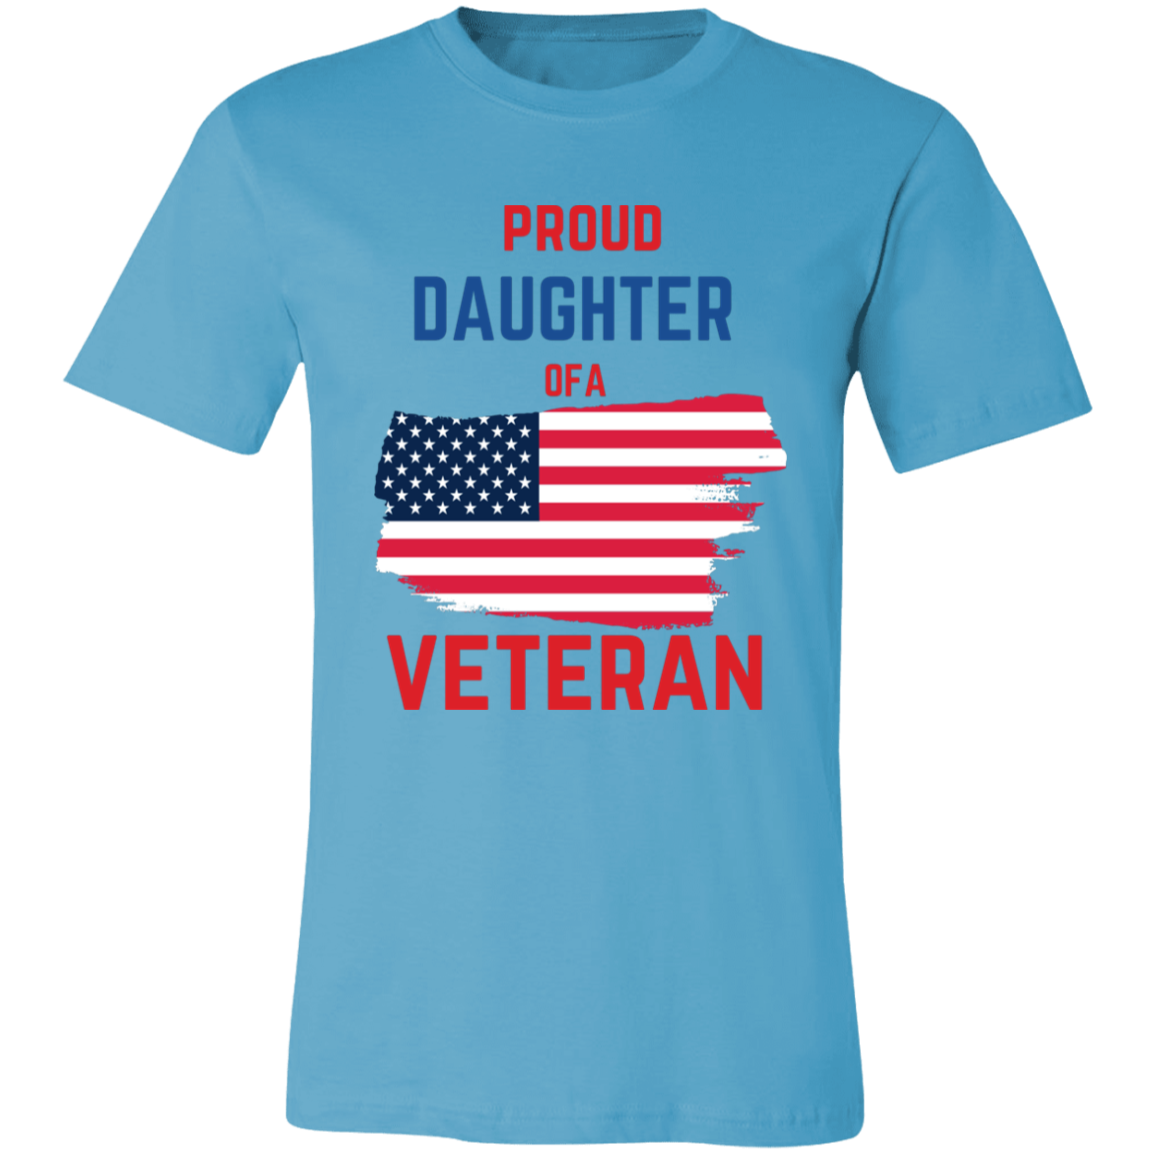 I am a Proud Daughter of a Veteran